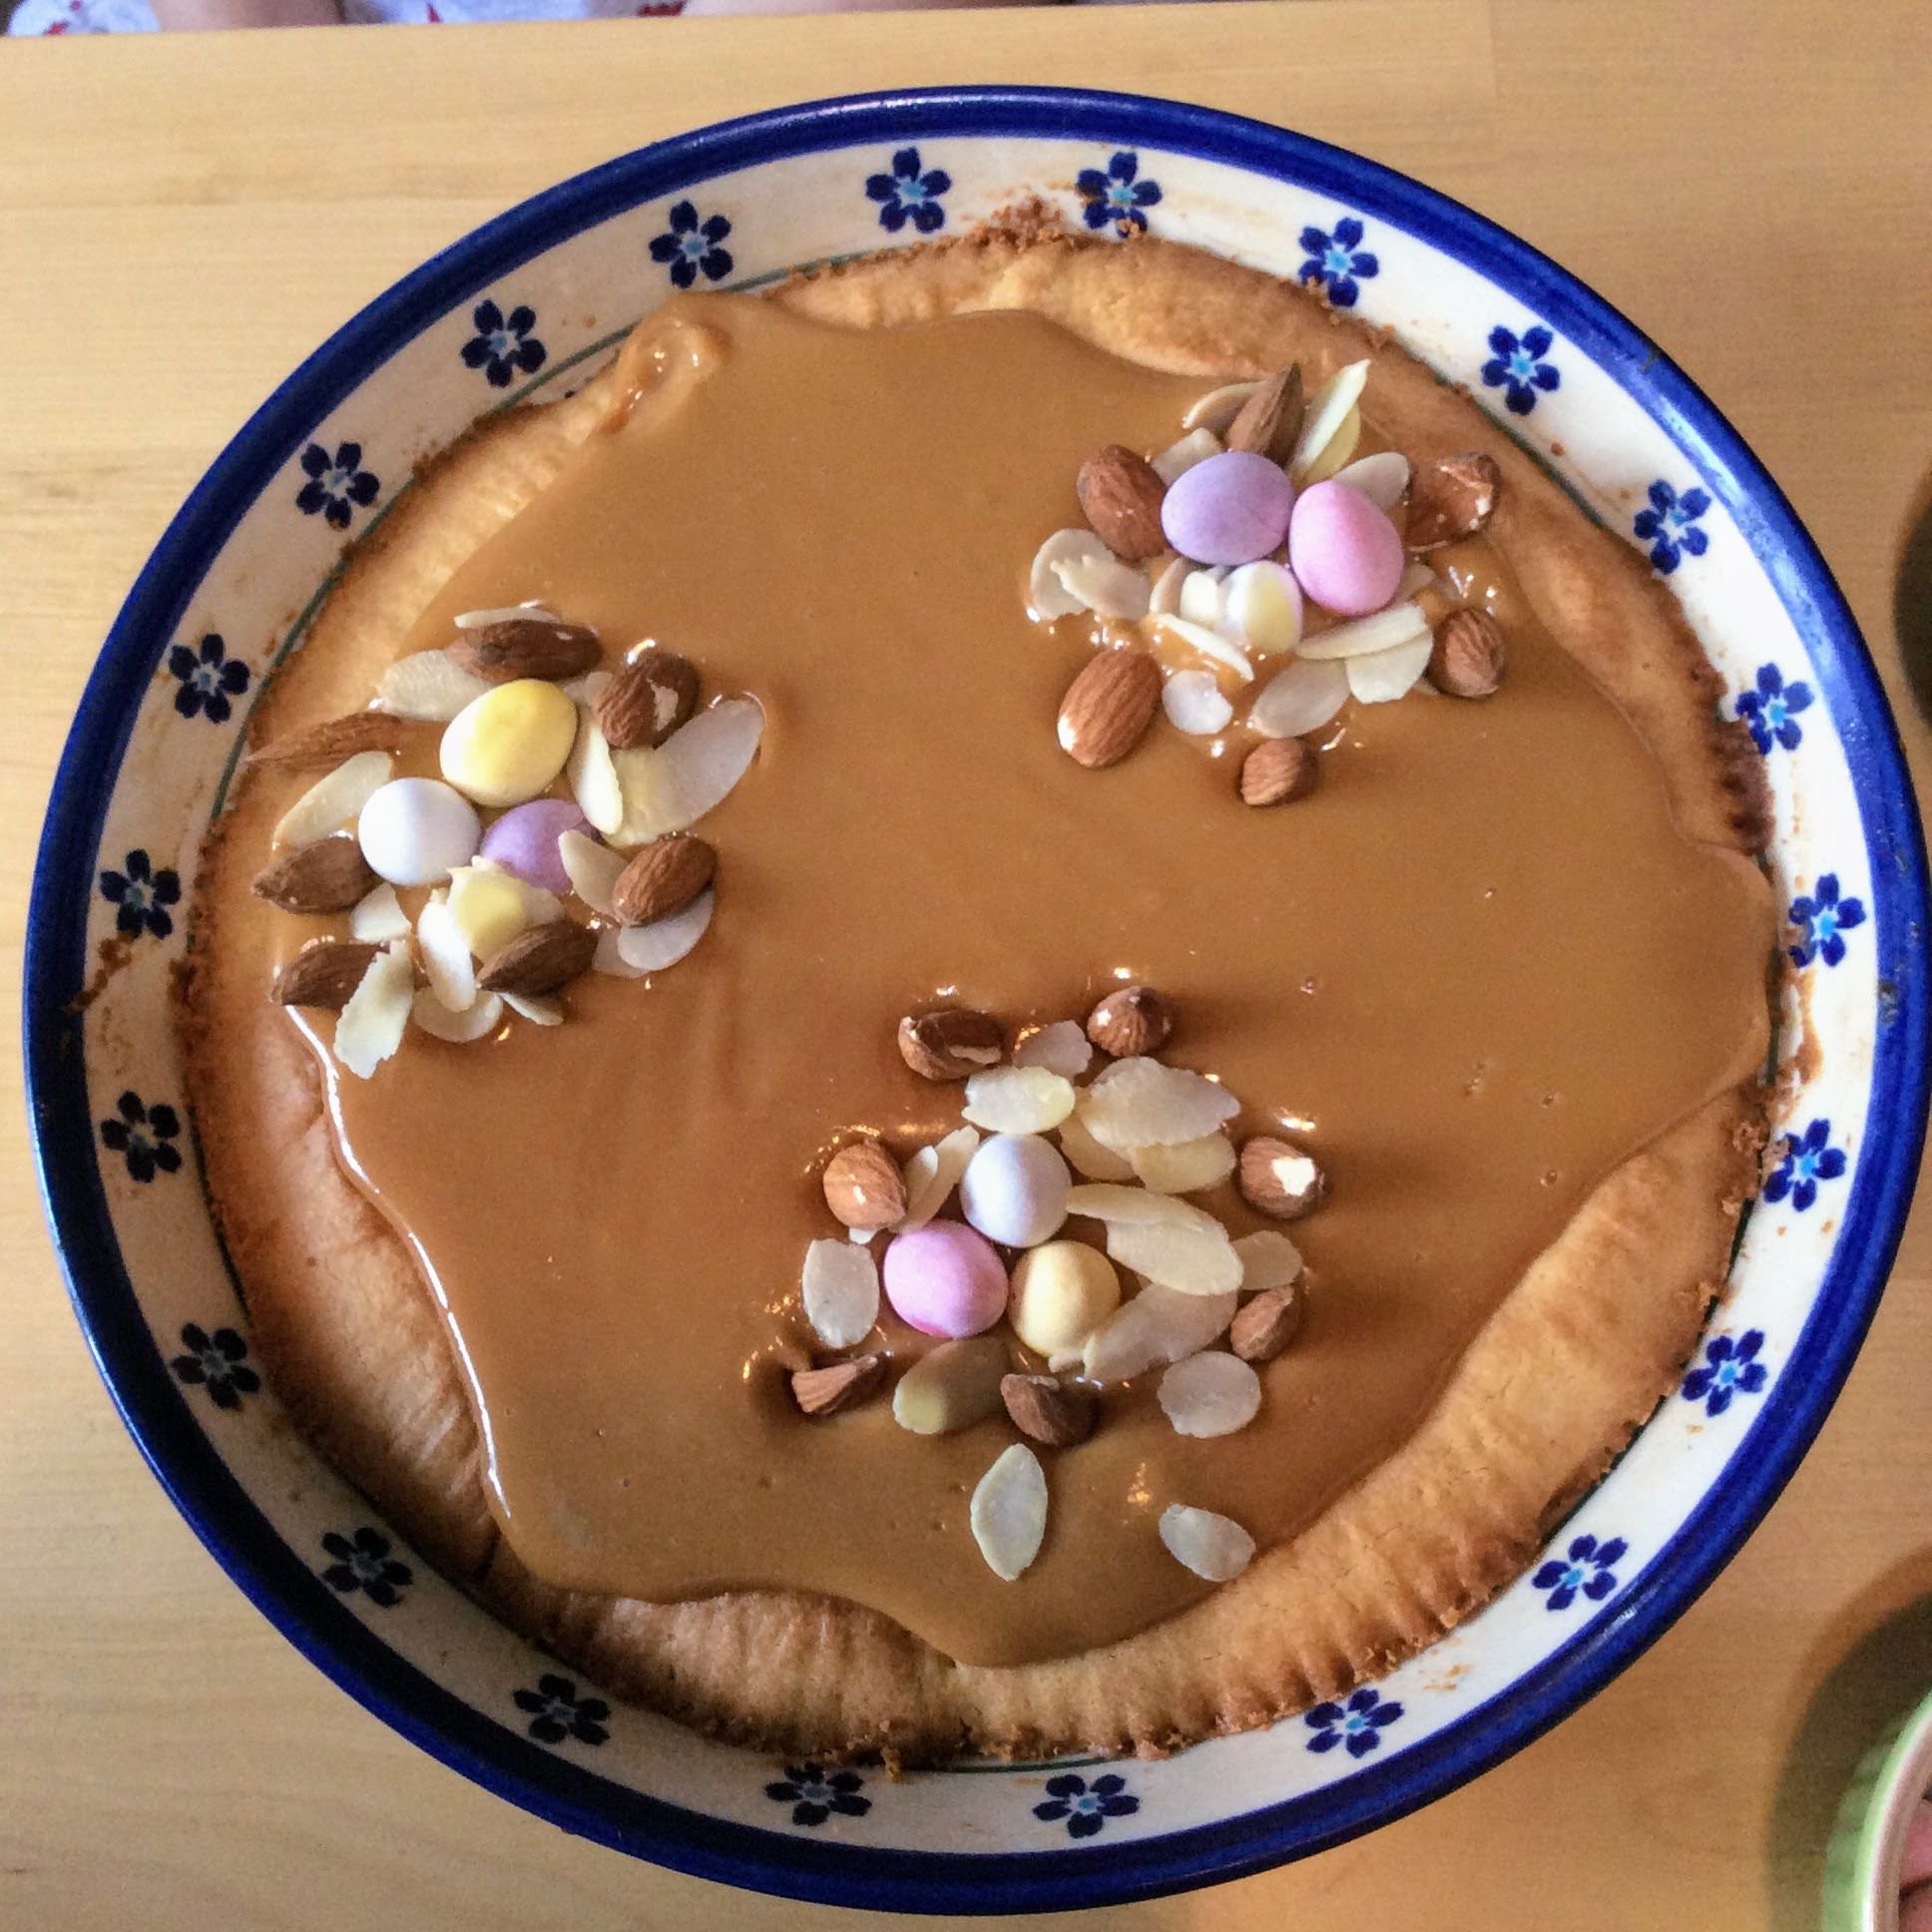 Round Polish Mazurek Easter cake decorated with caramel, almonds, chocolate eggs.